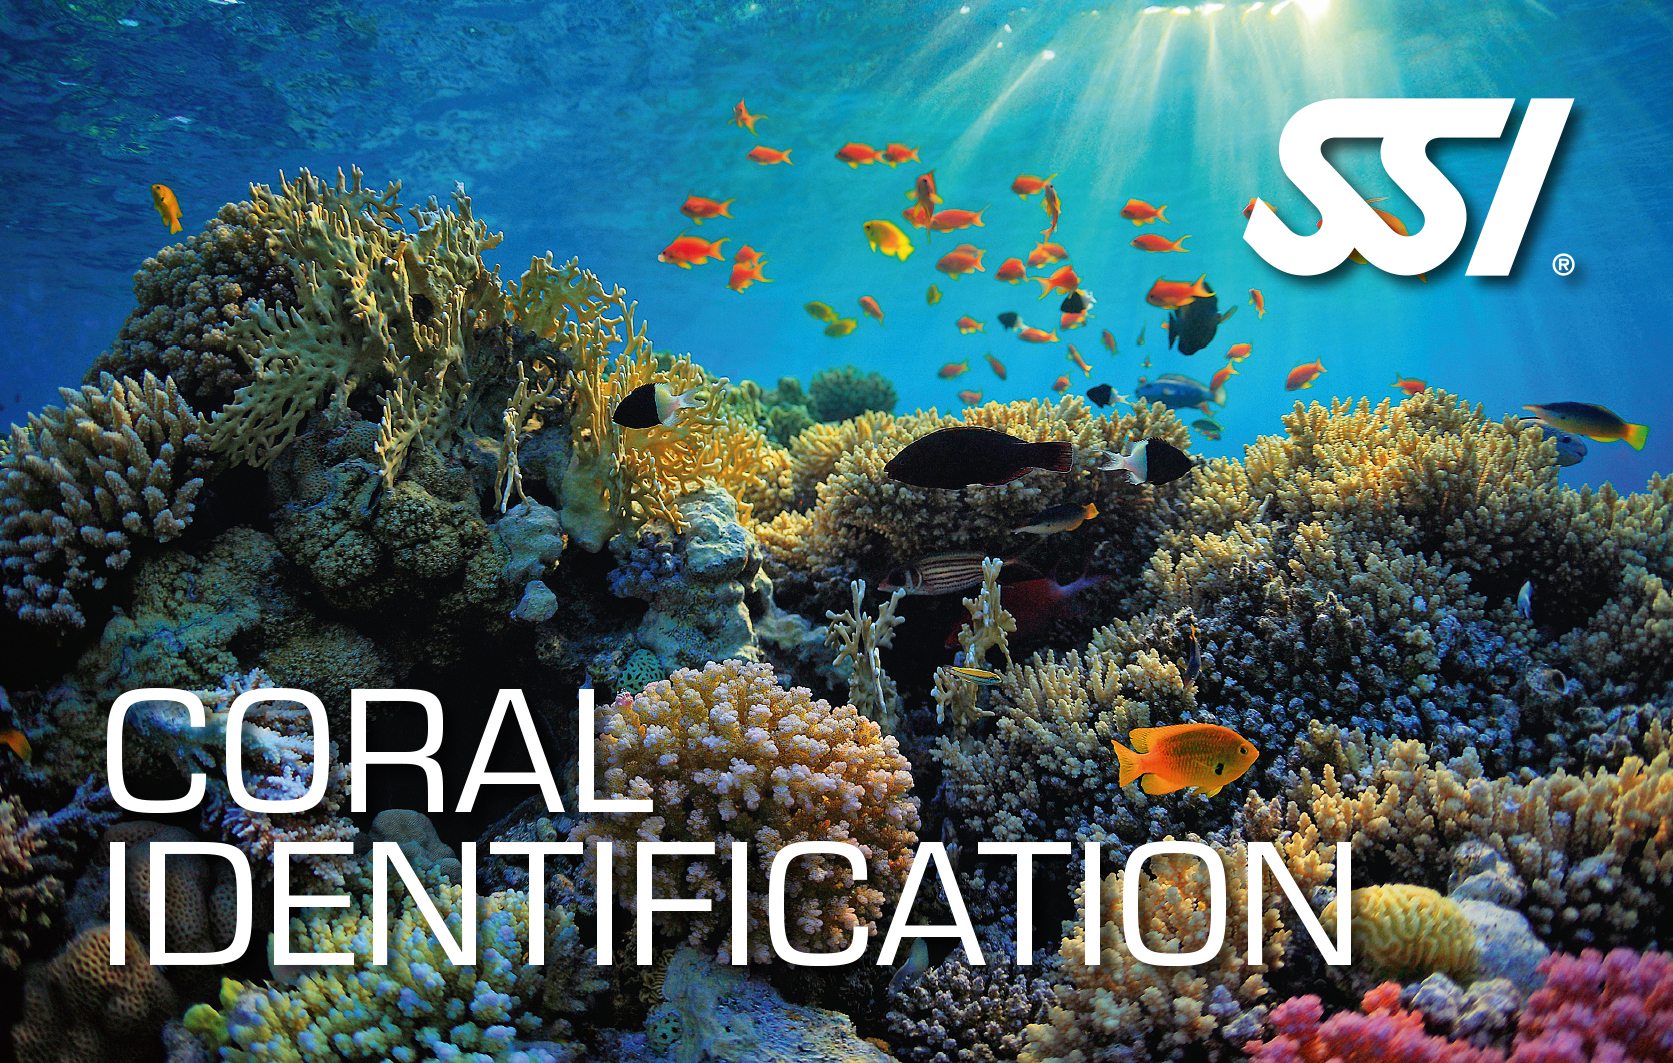 SSI Coral Identification | SSI Coral Identification Course Course Course | Coral Identification | Specialty Course | Diving Course